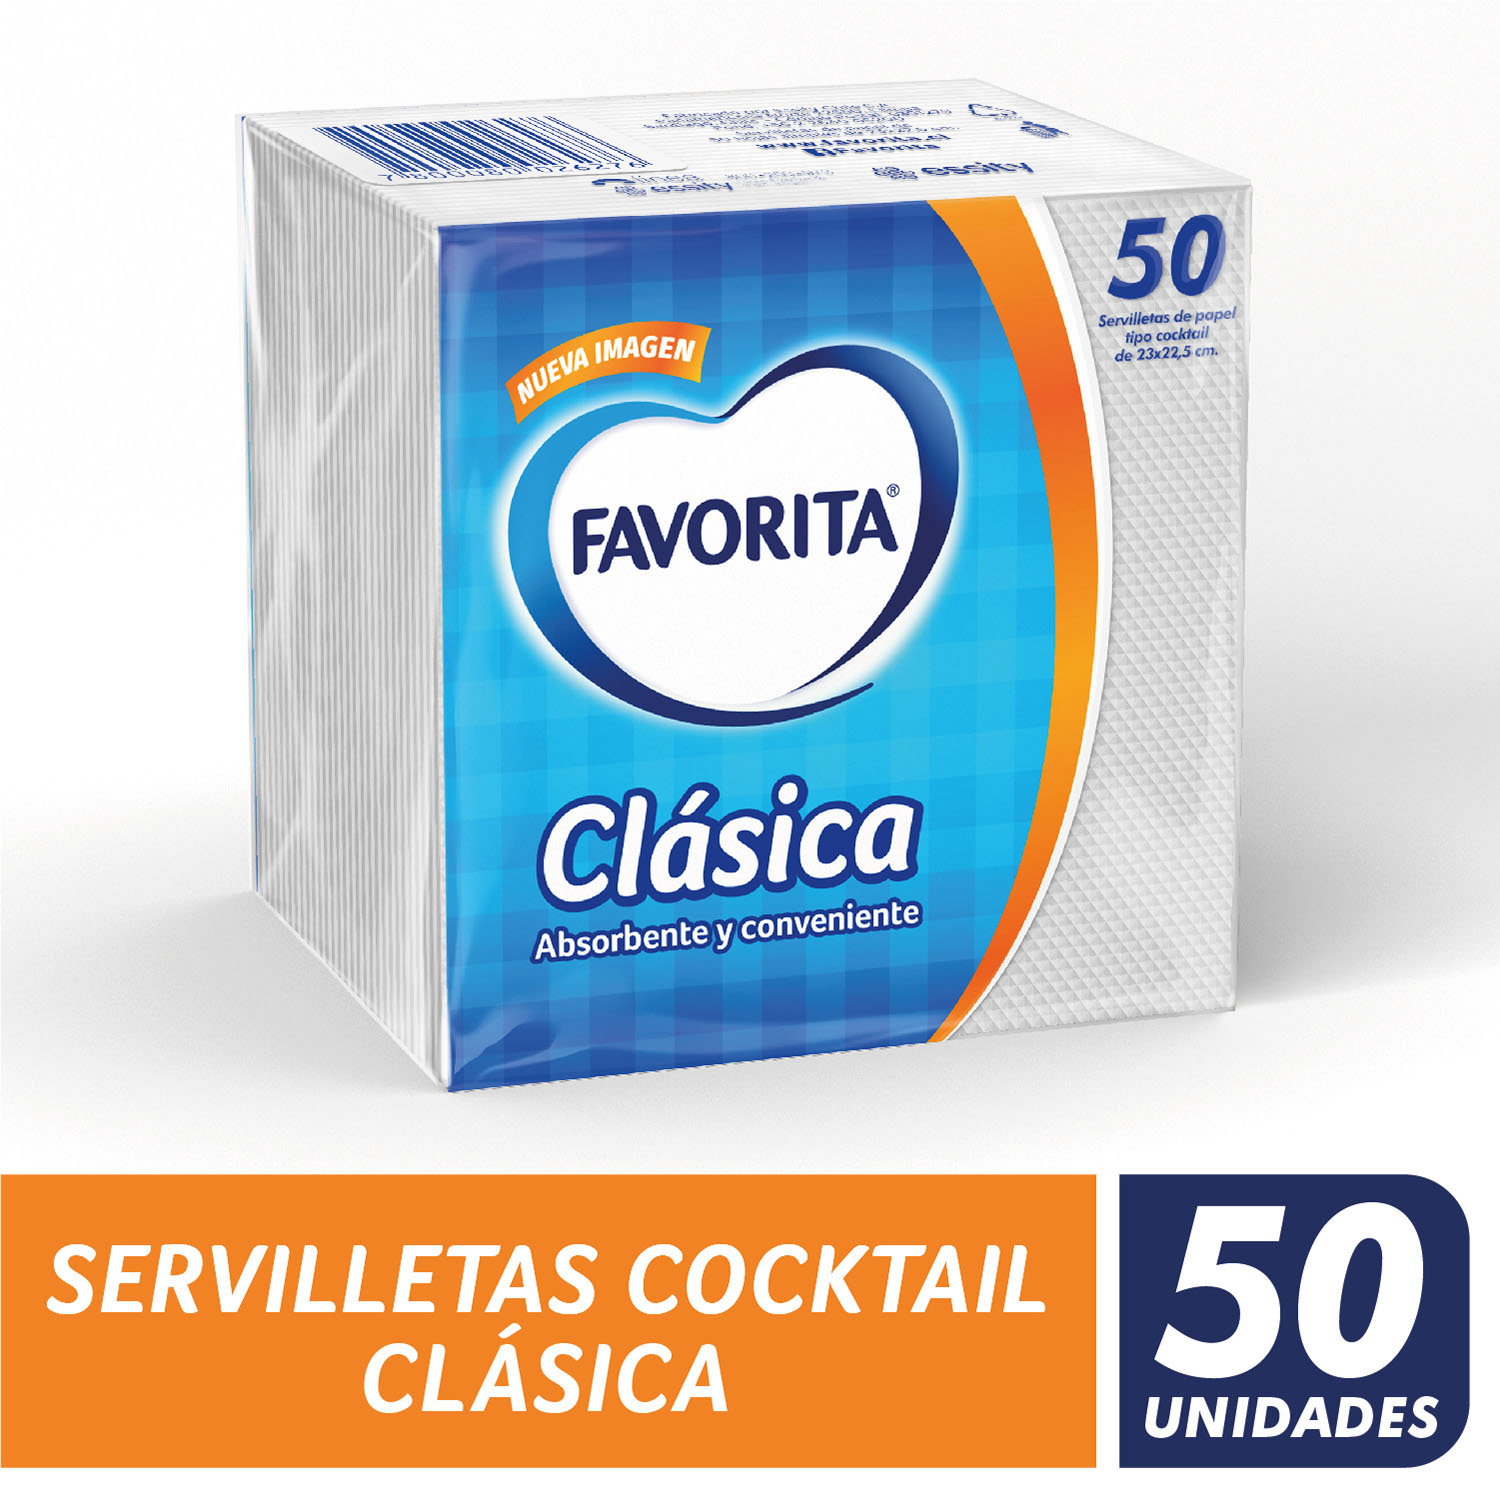 Servilleta Favorita Clásica Pack